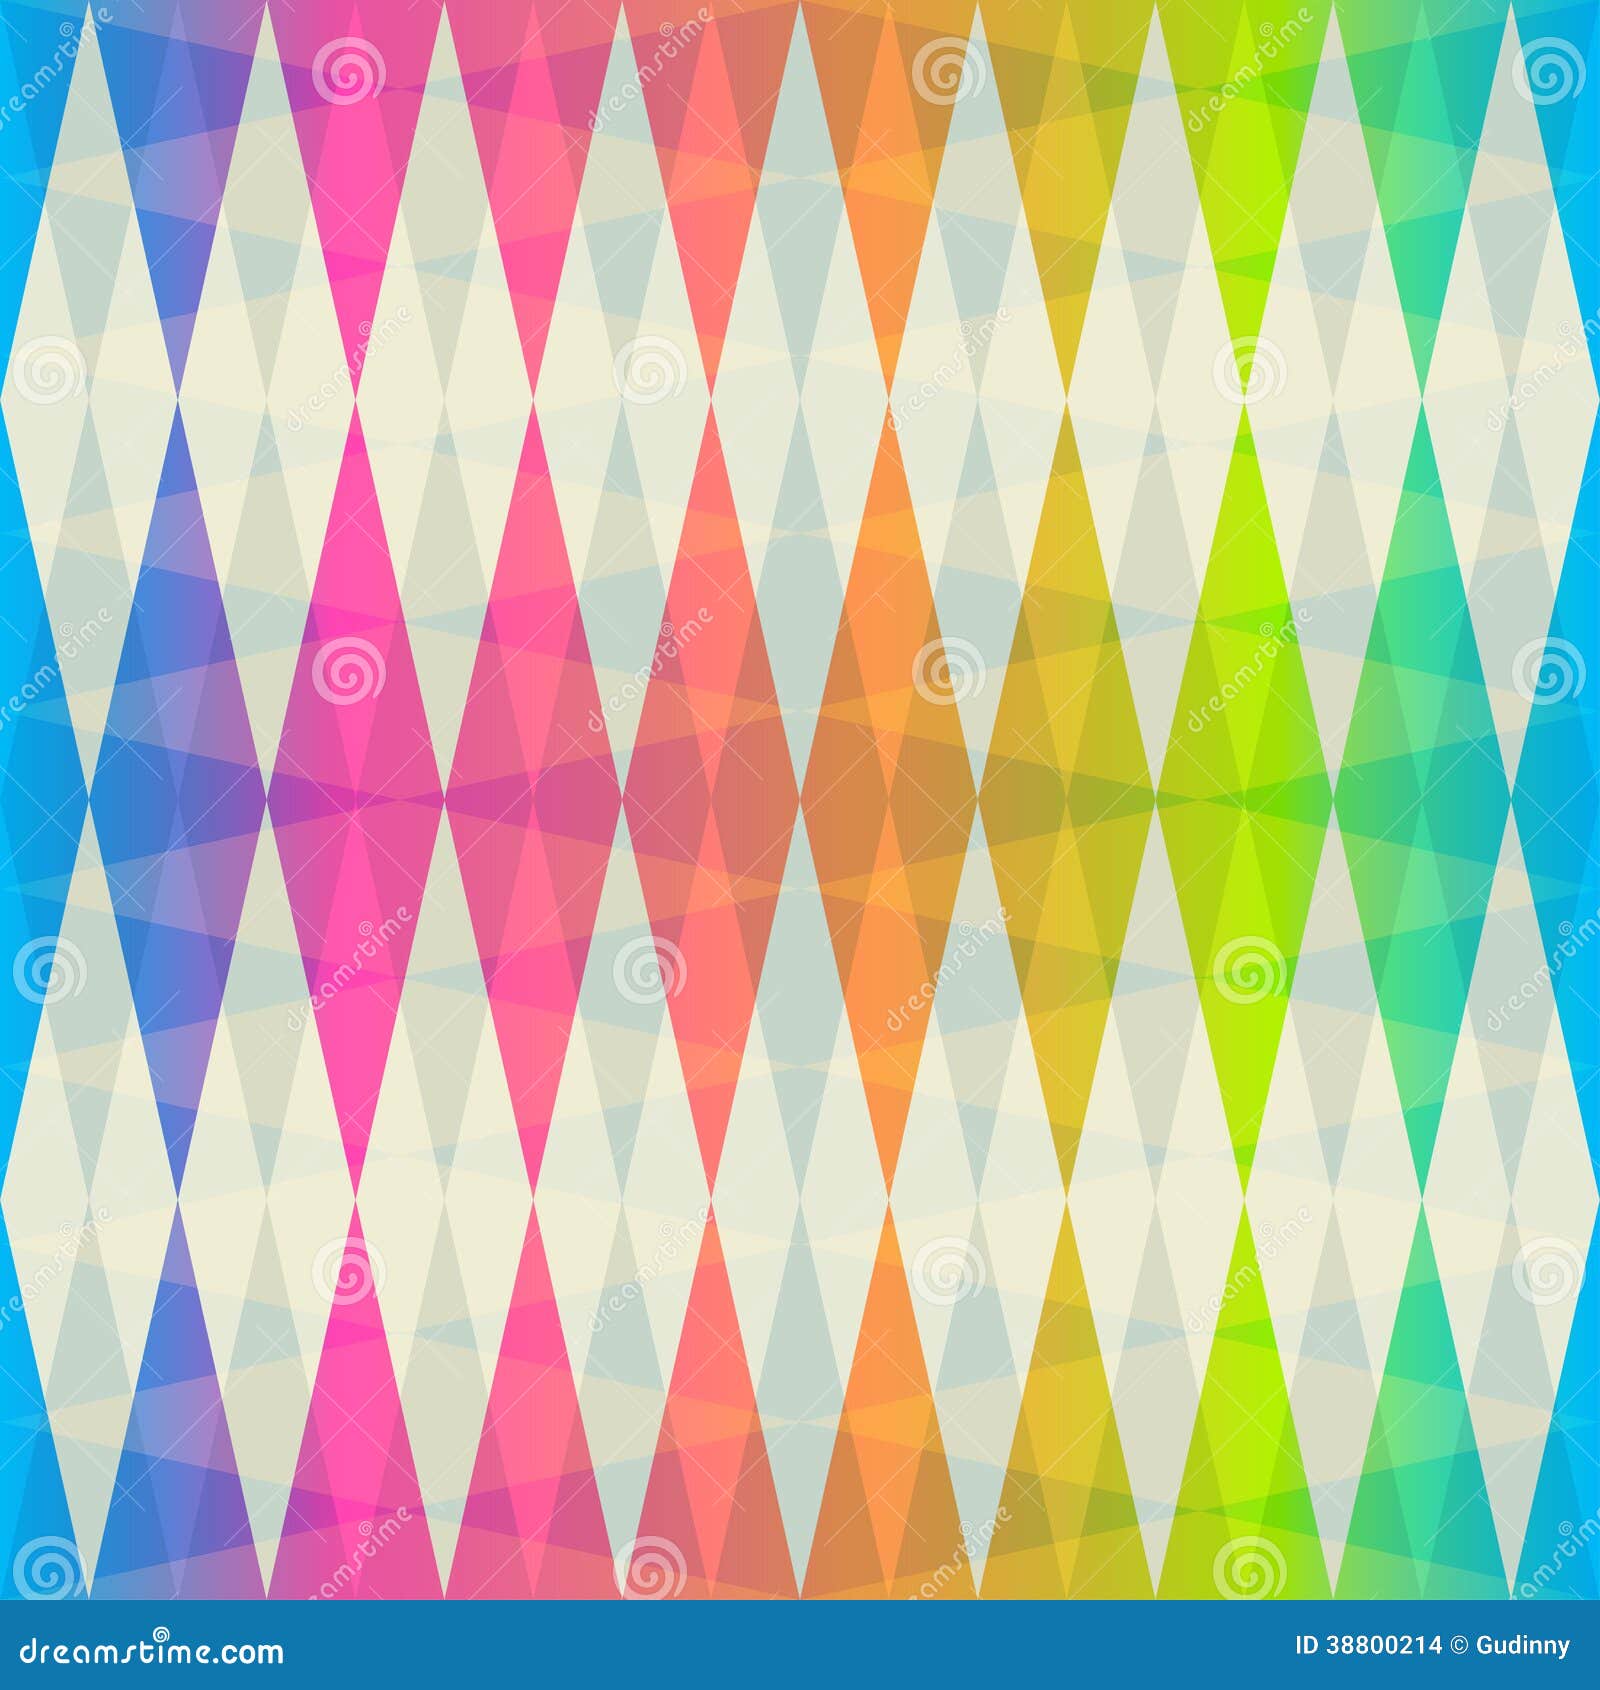 rainbow rhombus seamless pattern